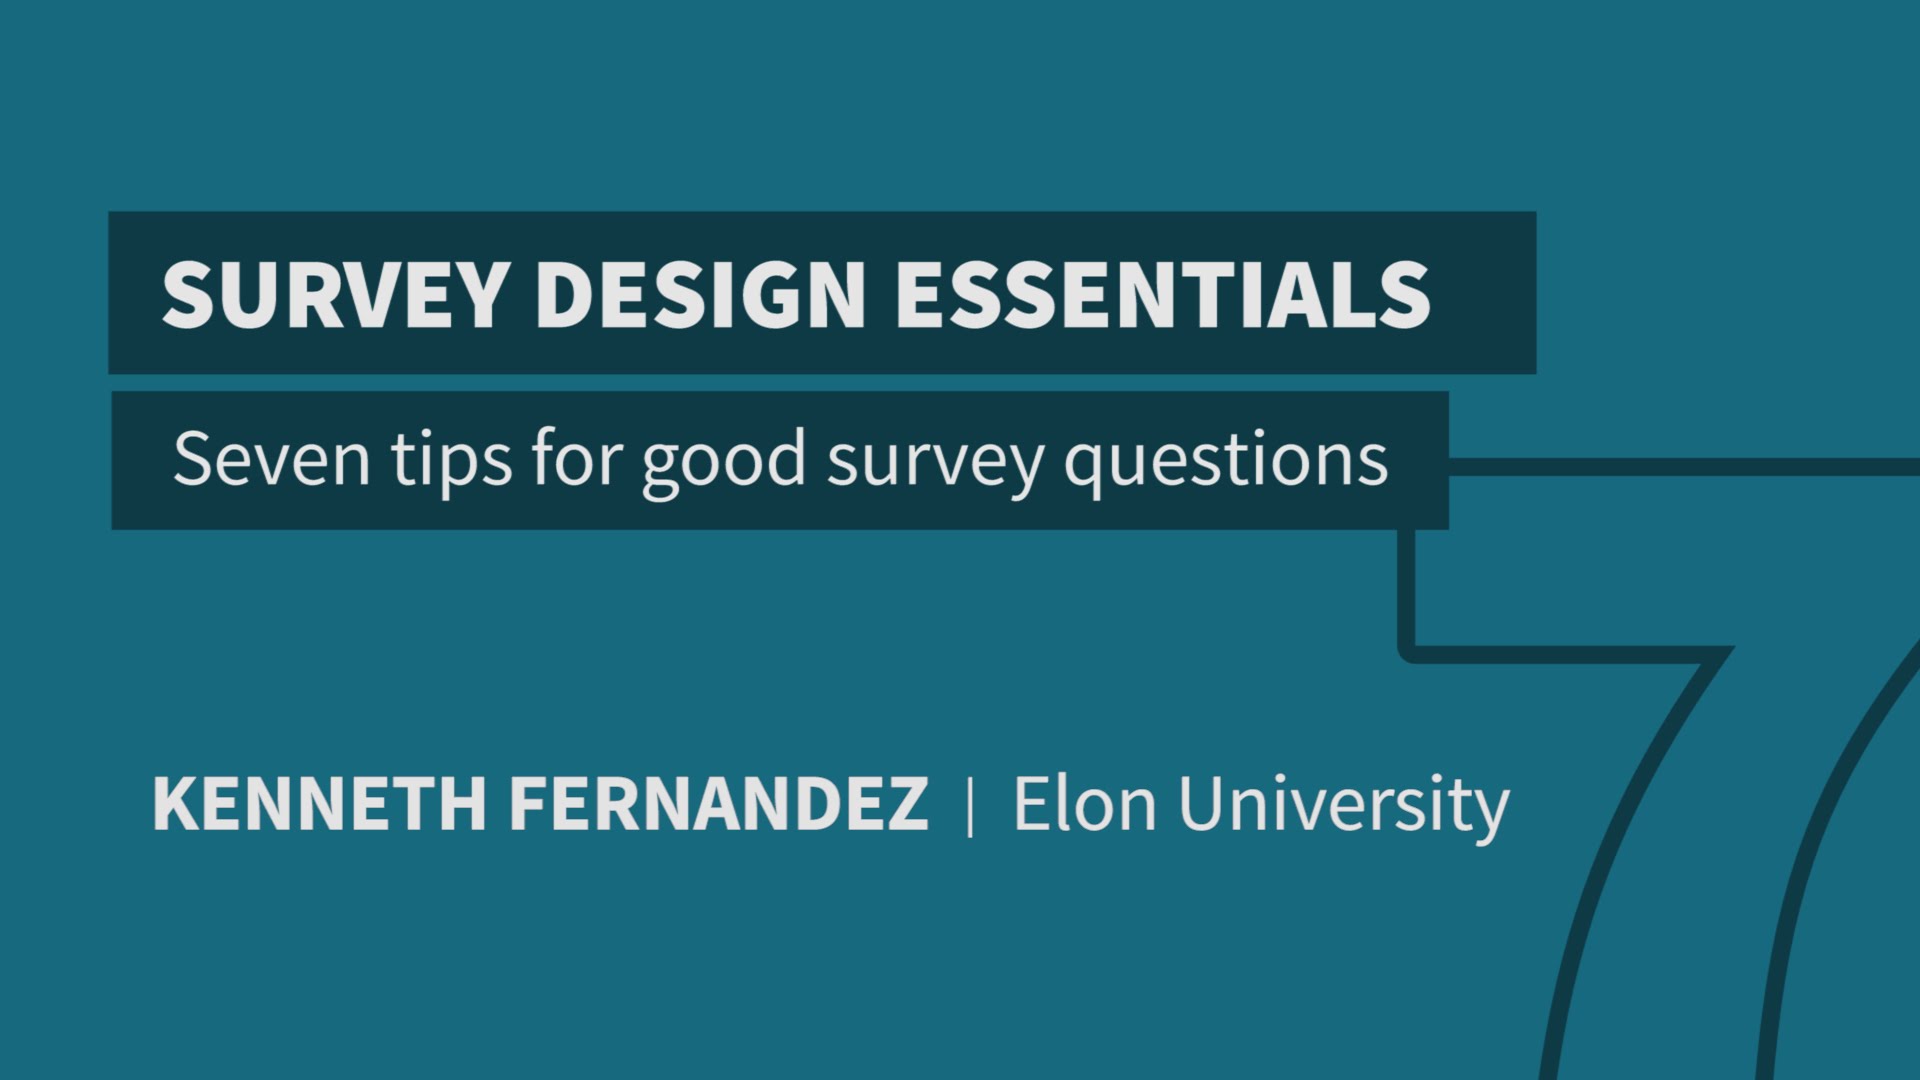 7 tips for good survey questions | Survey Design Essentials